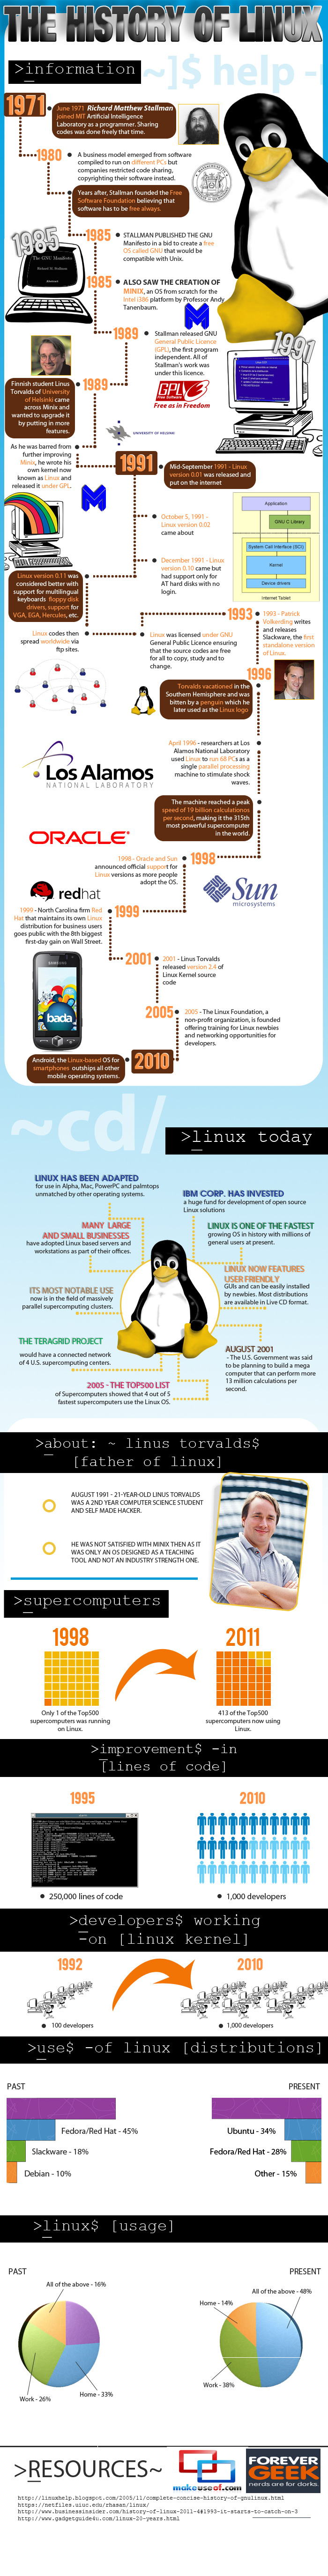 Infografia historia de linux